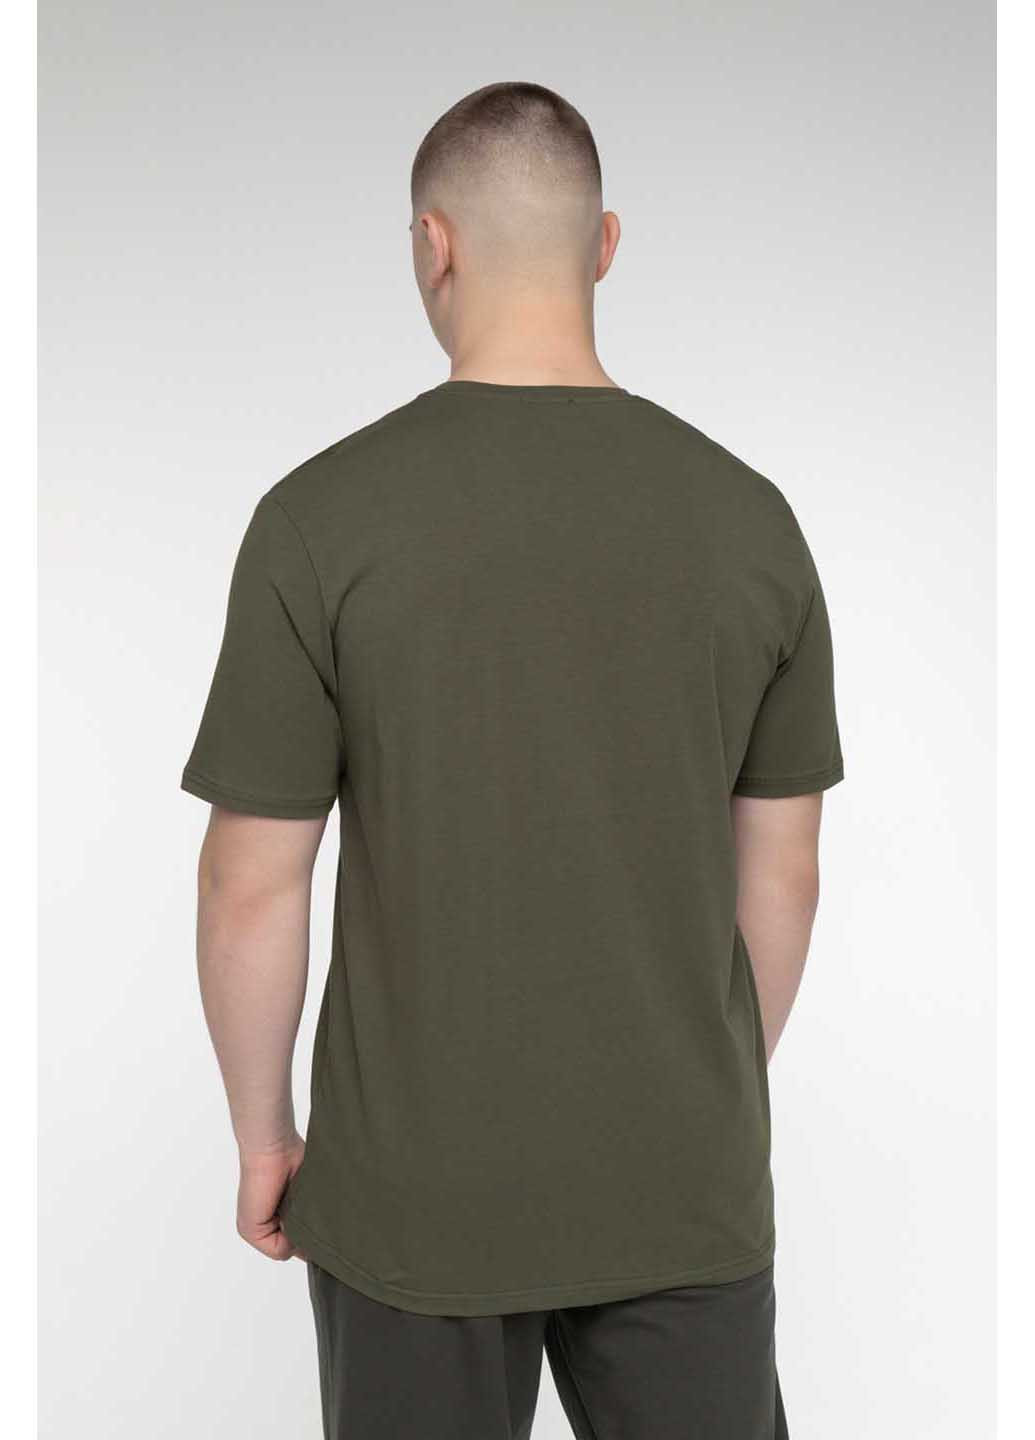 Хаки (оливковая) футболка однотонная Hope